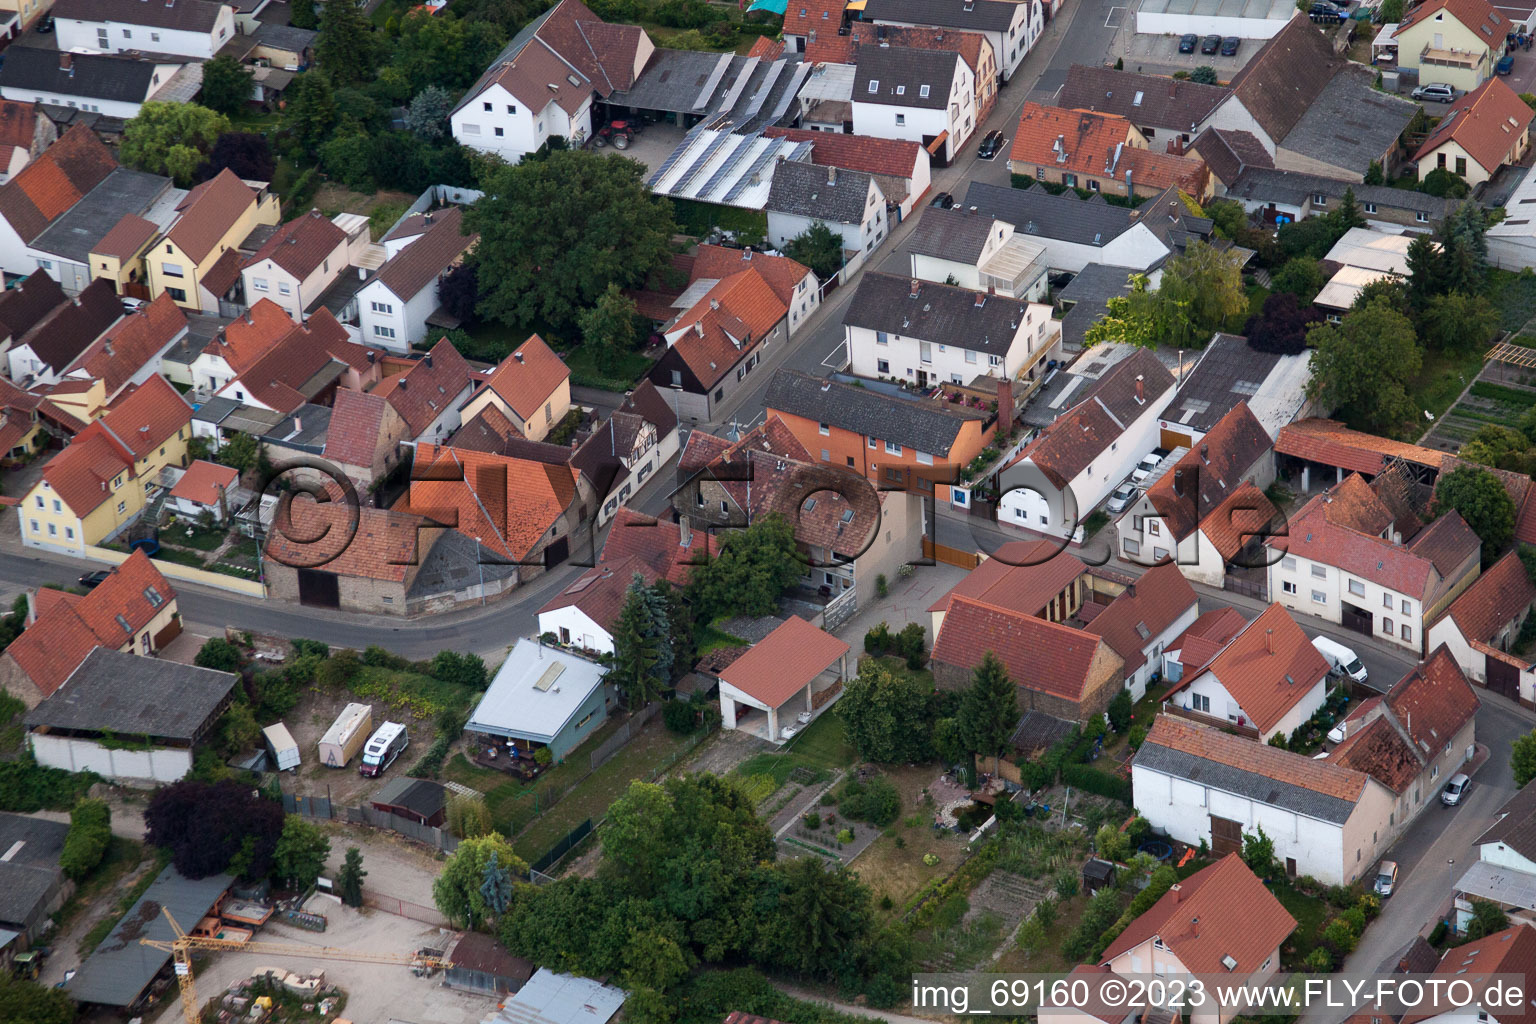 District Bobenheim in Bobenheim-Roxheim in the state Rhineland-Palatinate, Germany from a drone